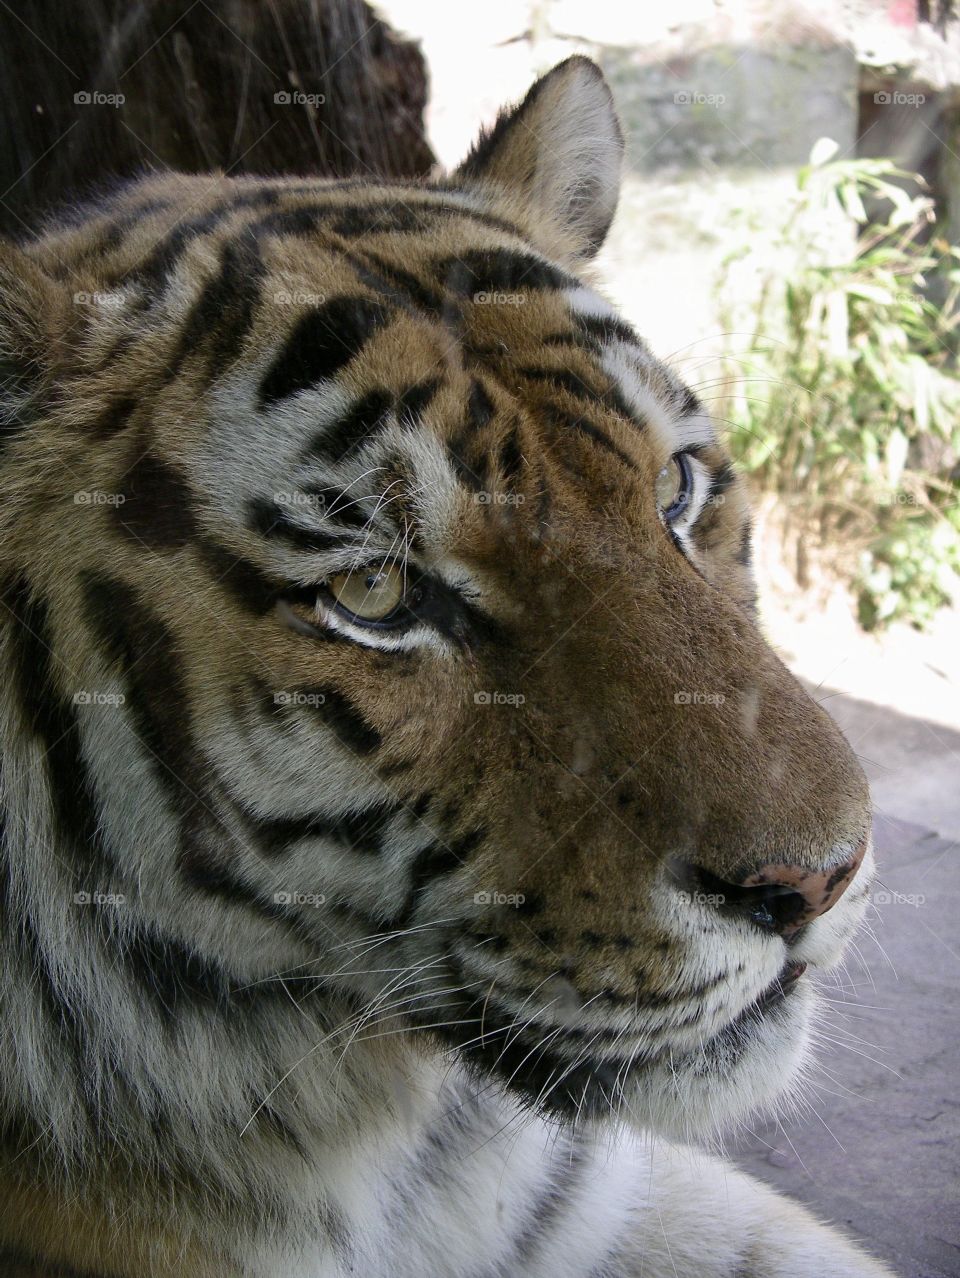 A tigerhead big and beautiful. 